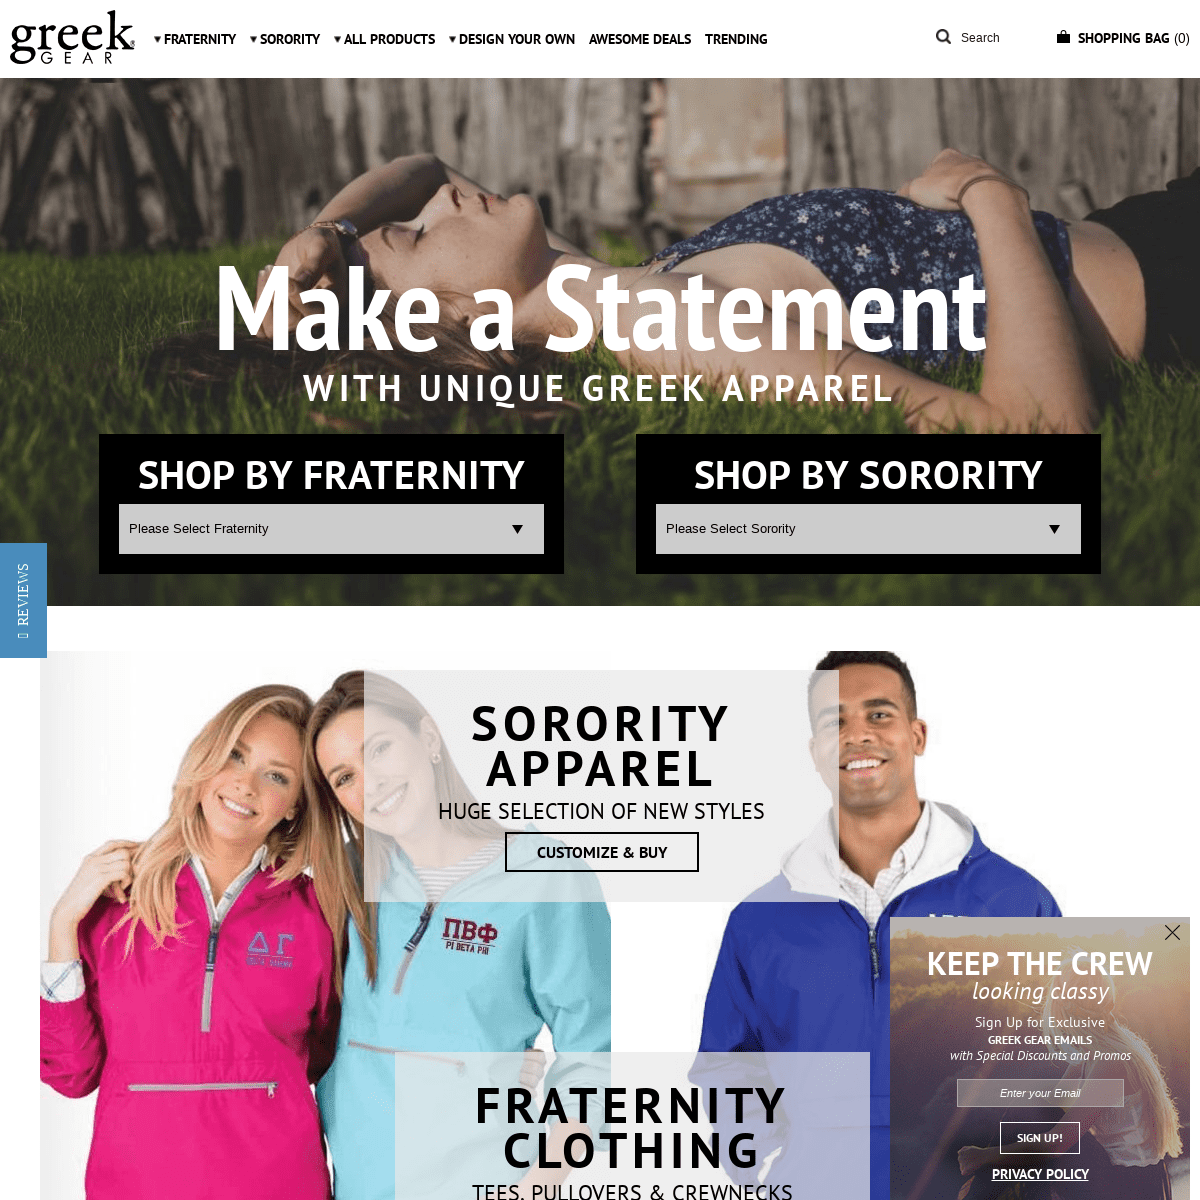 Greek Apparel & Clothing - Sorority & Fraternity Apparel, Merchandise